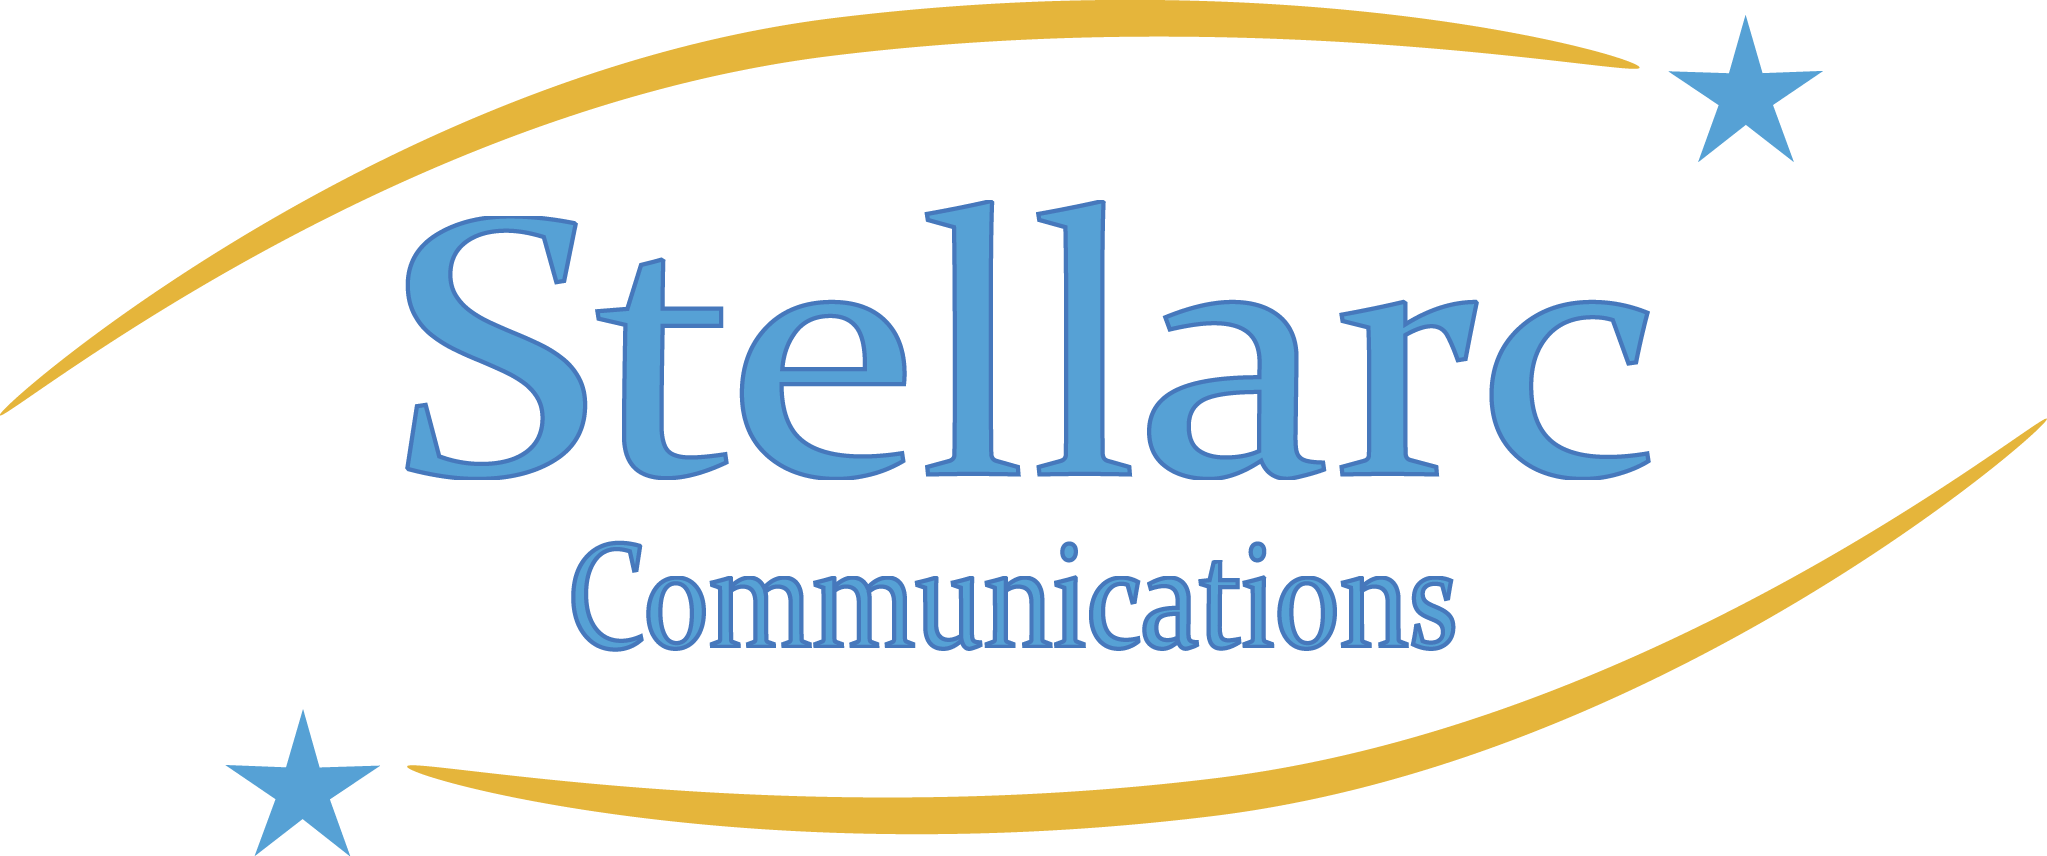 STELLARC COMMUNICATIONS INC